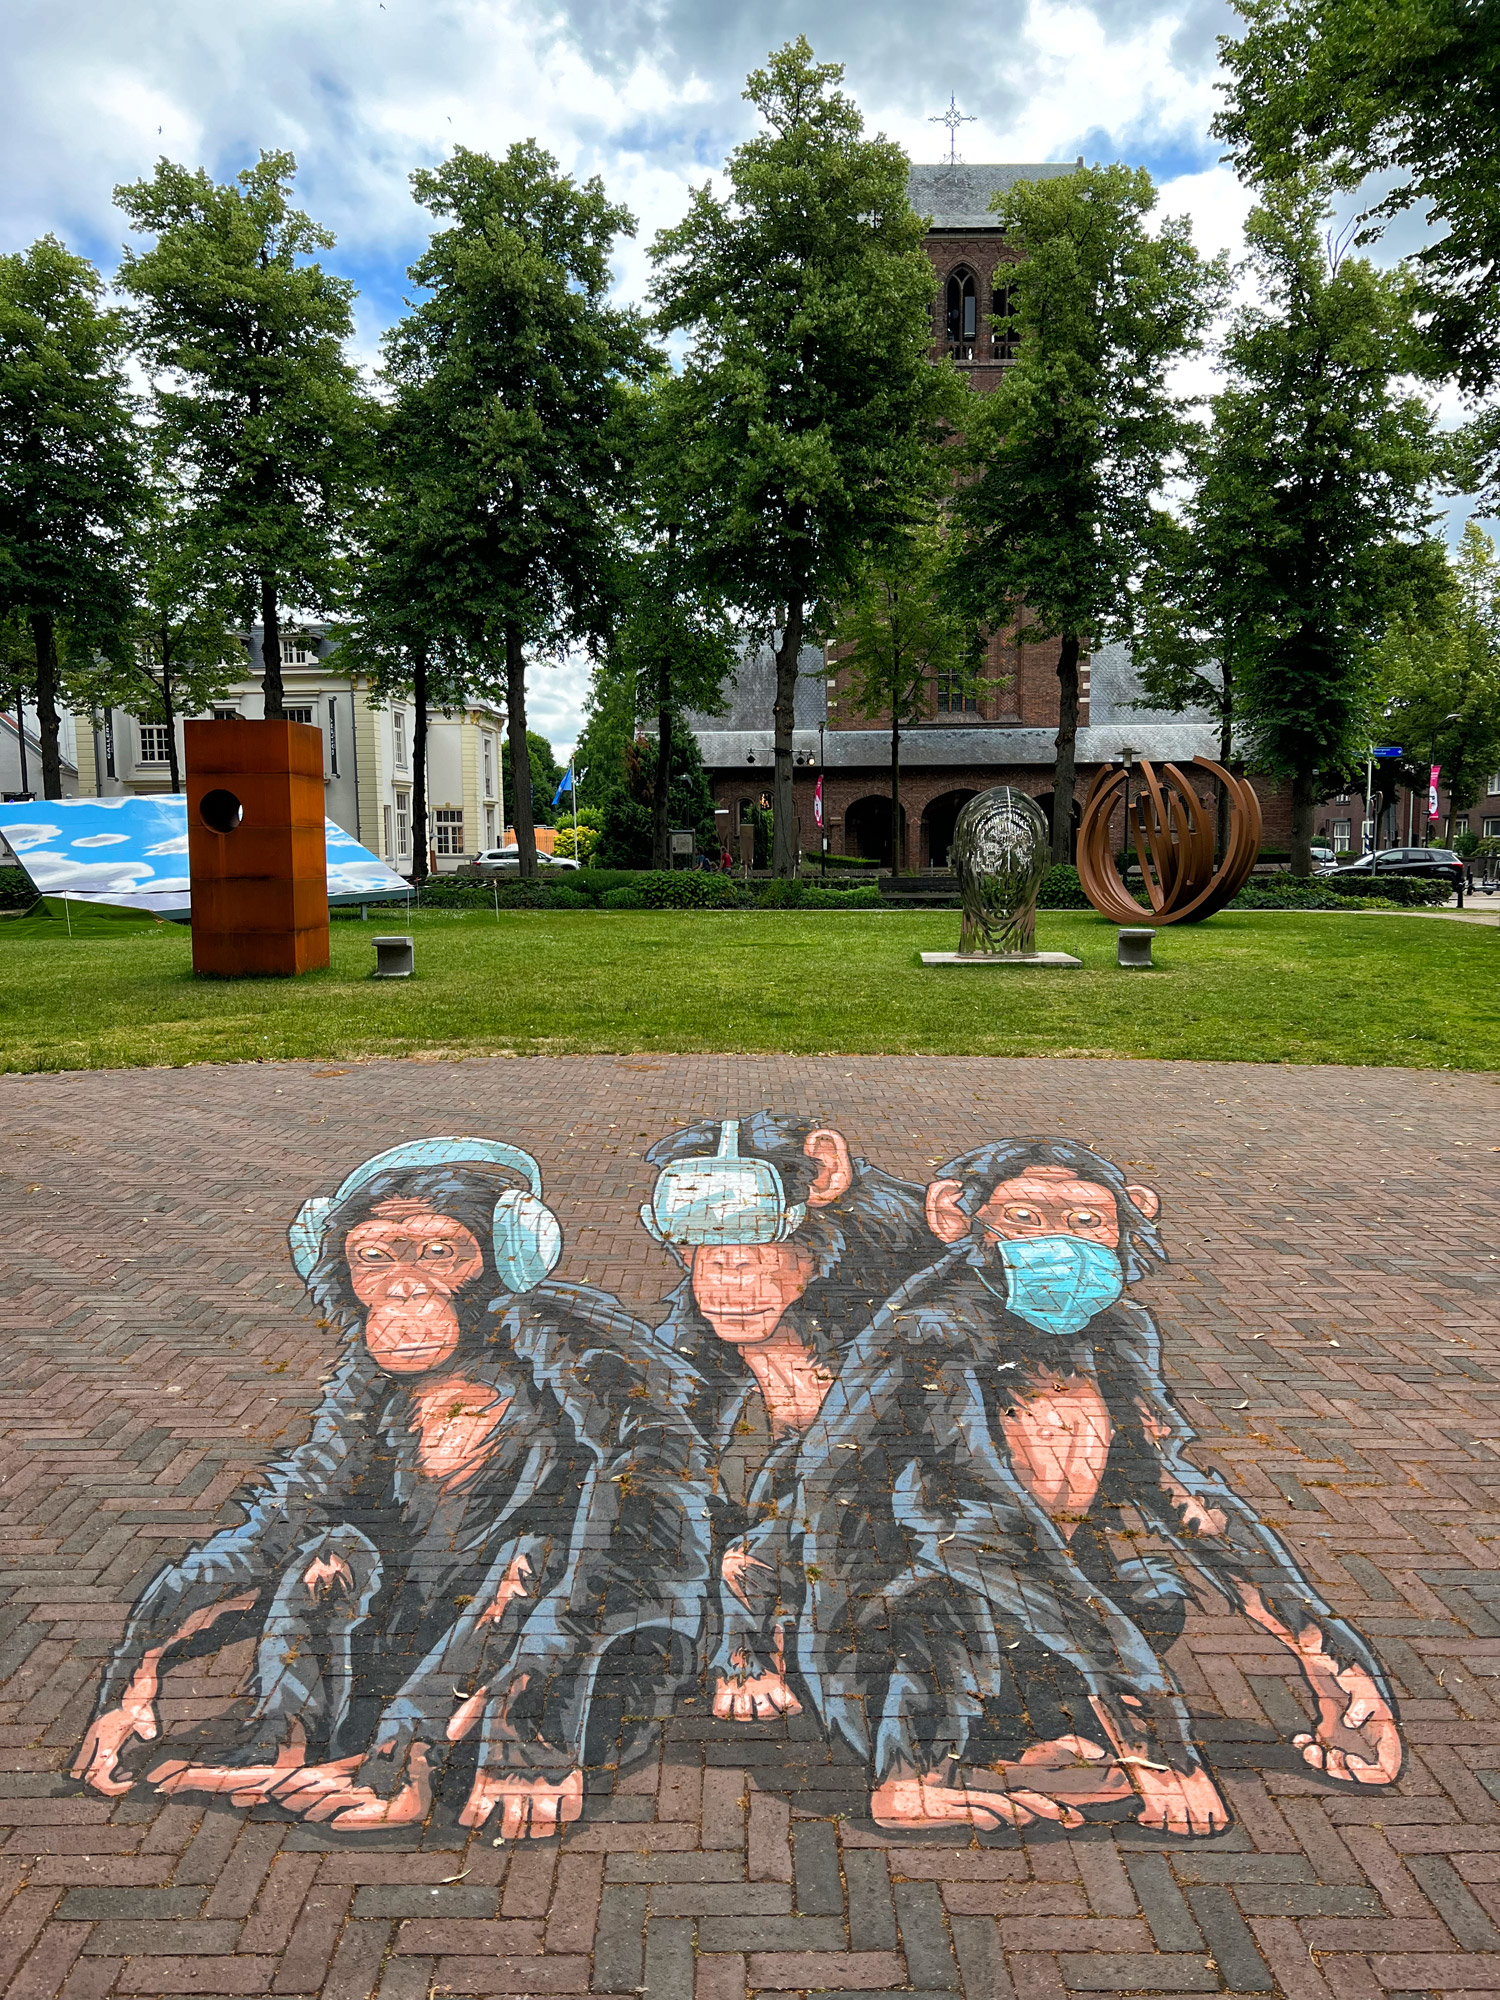 Wat te doen in Oisterwijk - Art in Oisterwijk